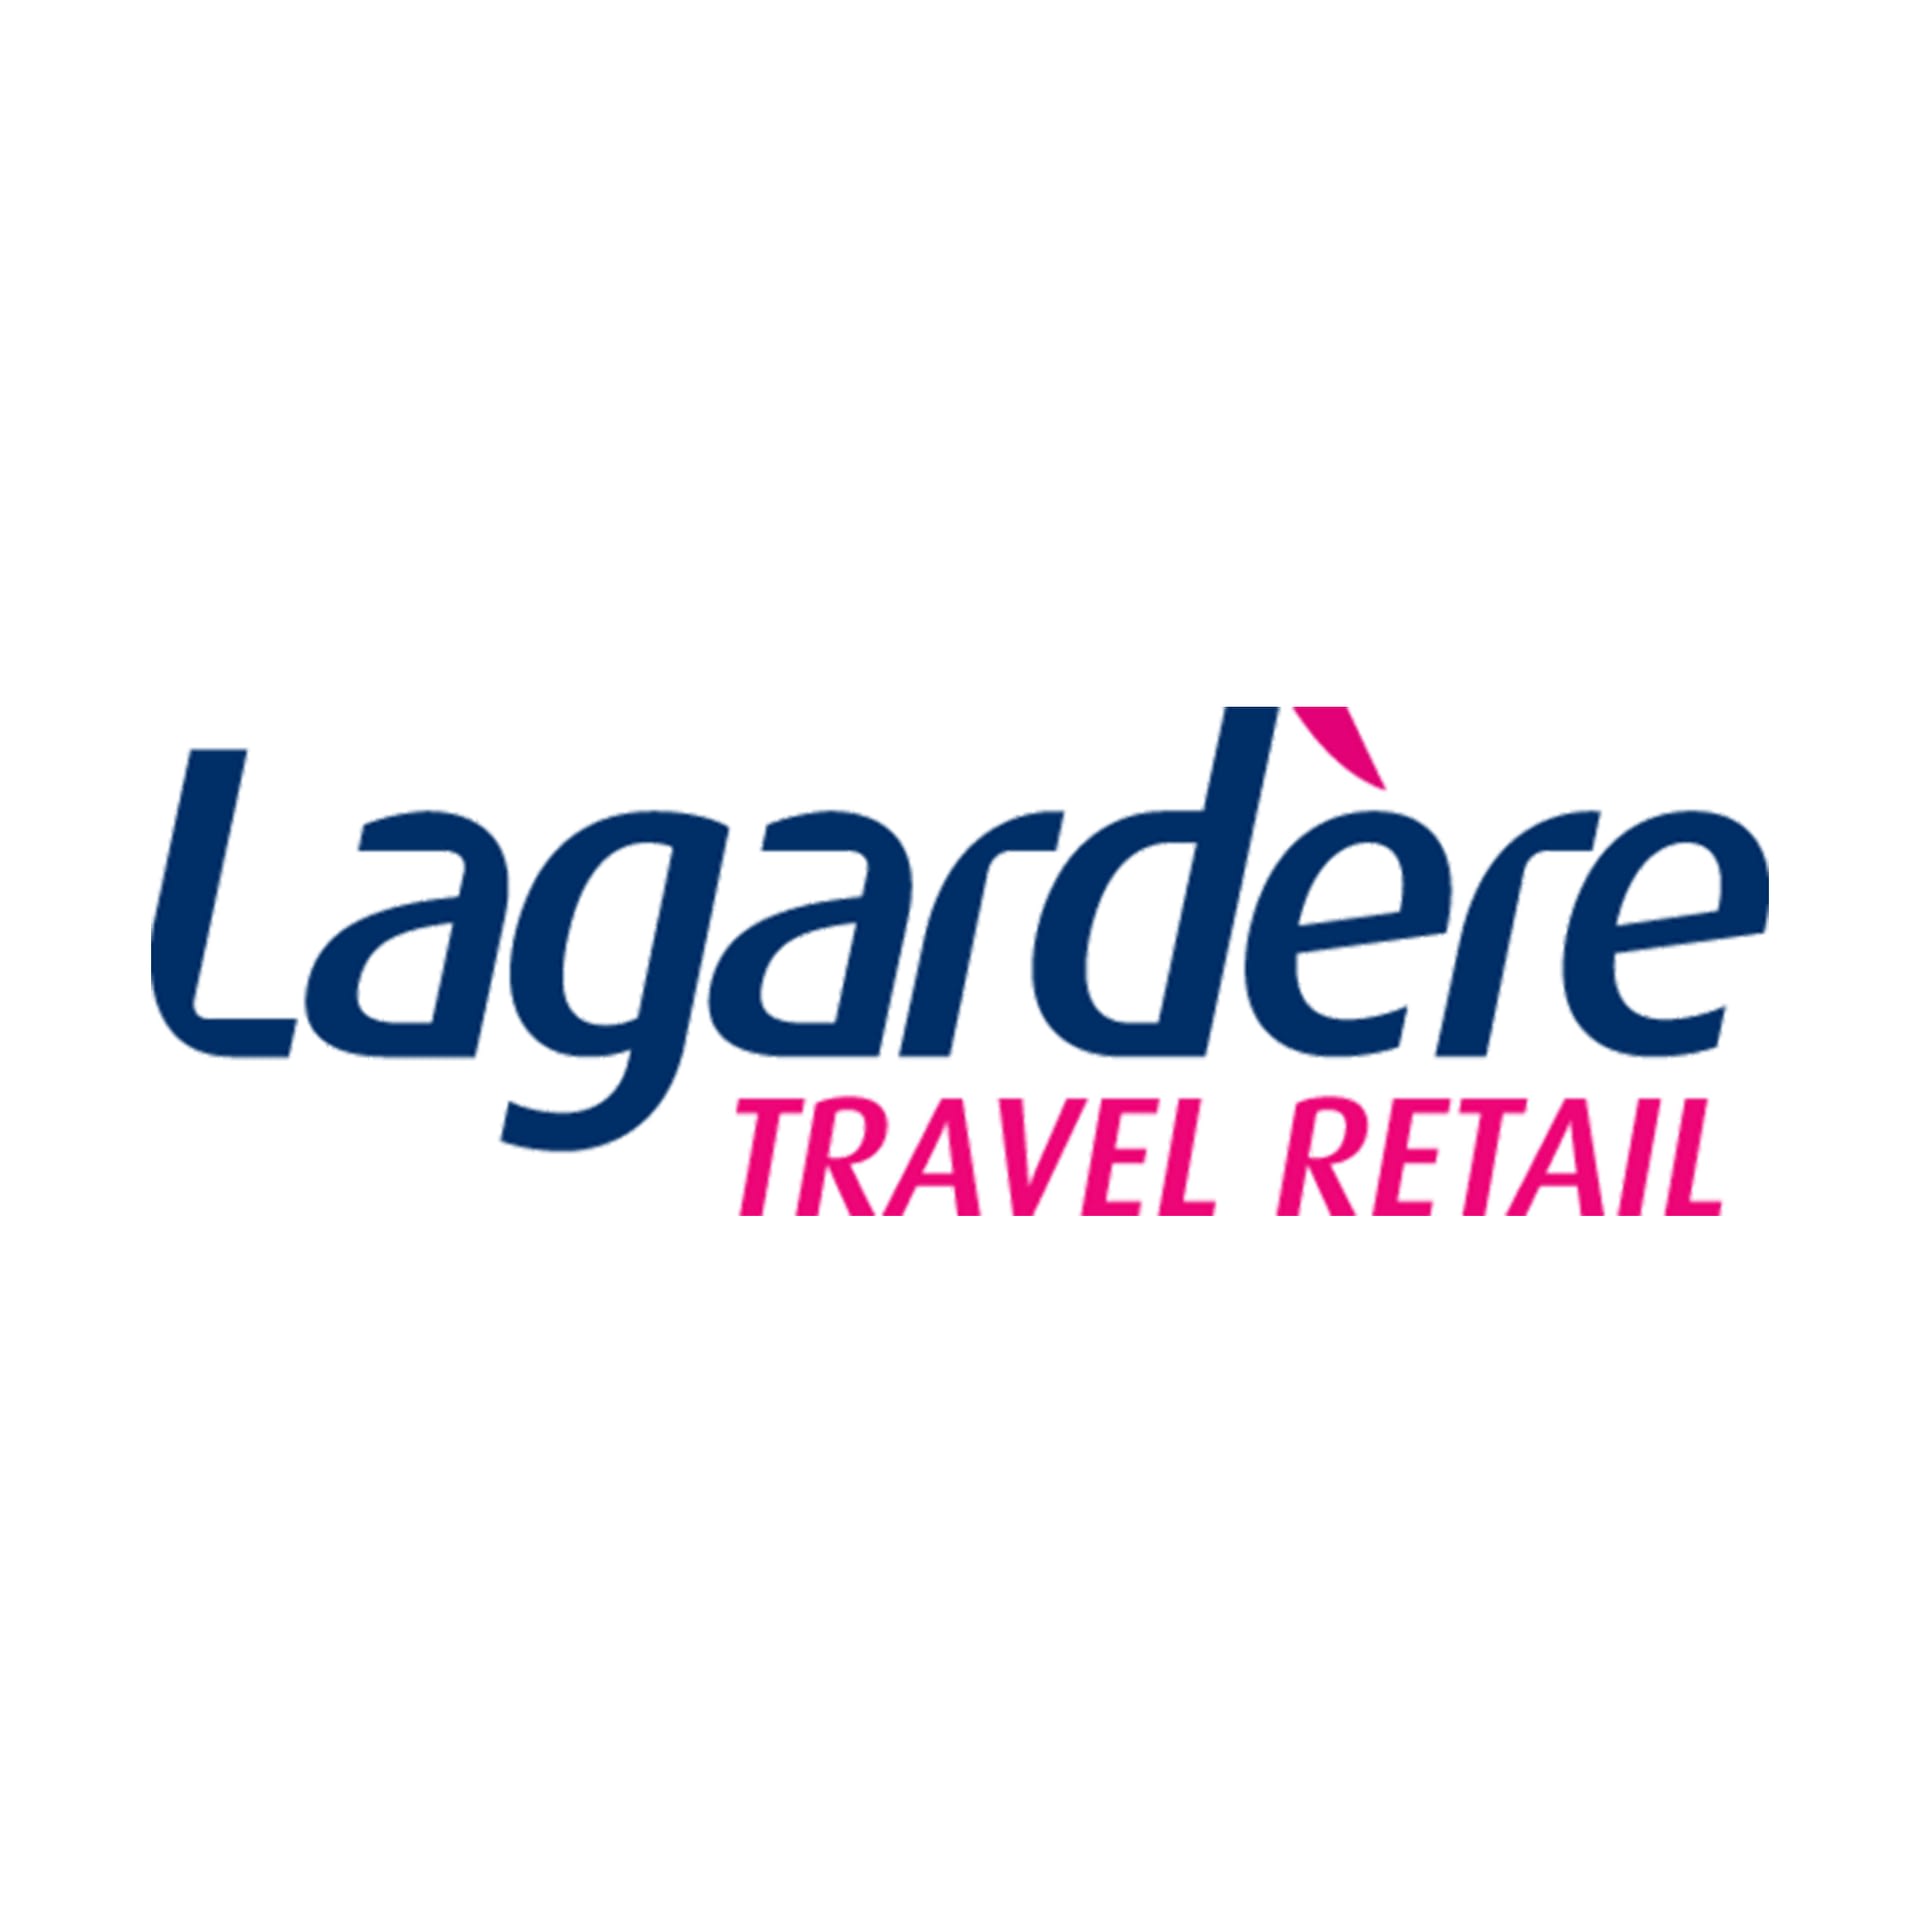 lagardere-travel-retail